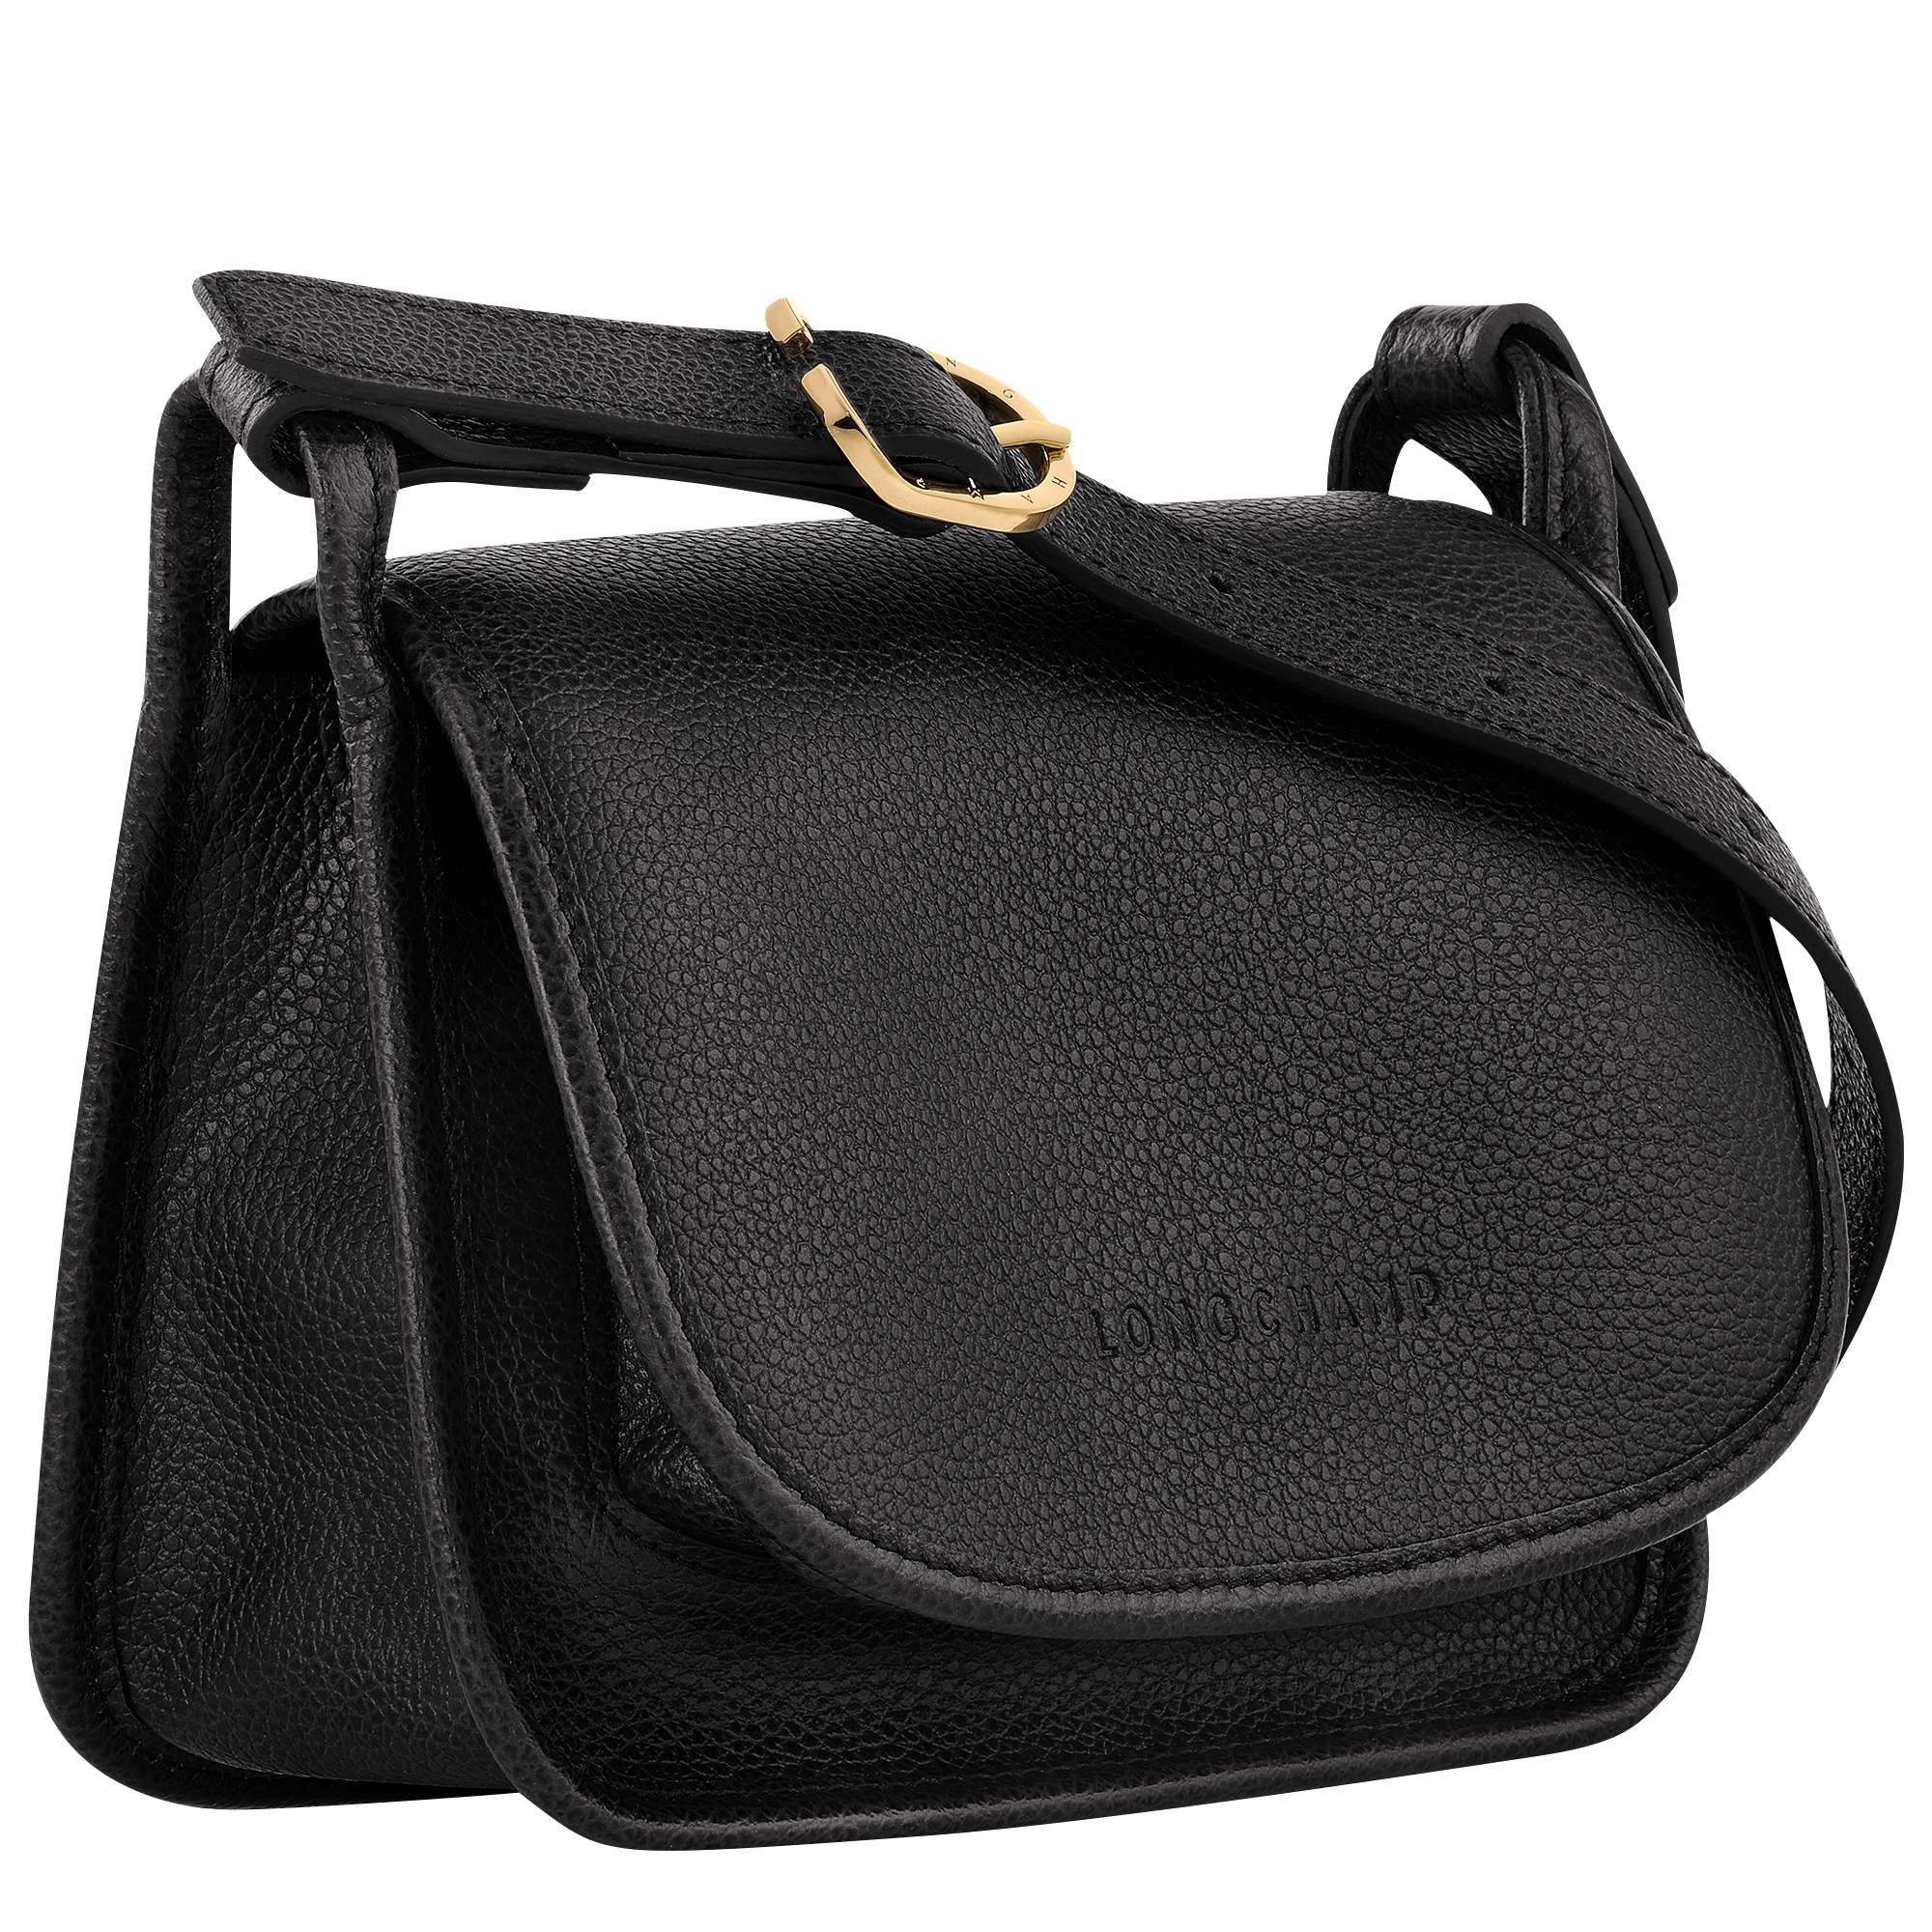 Cross body bags Longchamp - Roseau black leather cross body bag